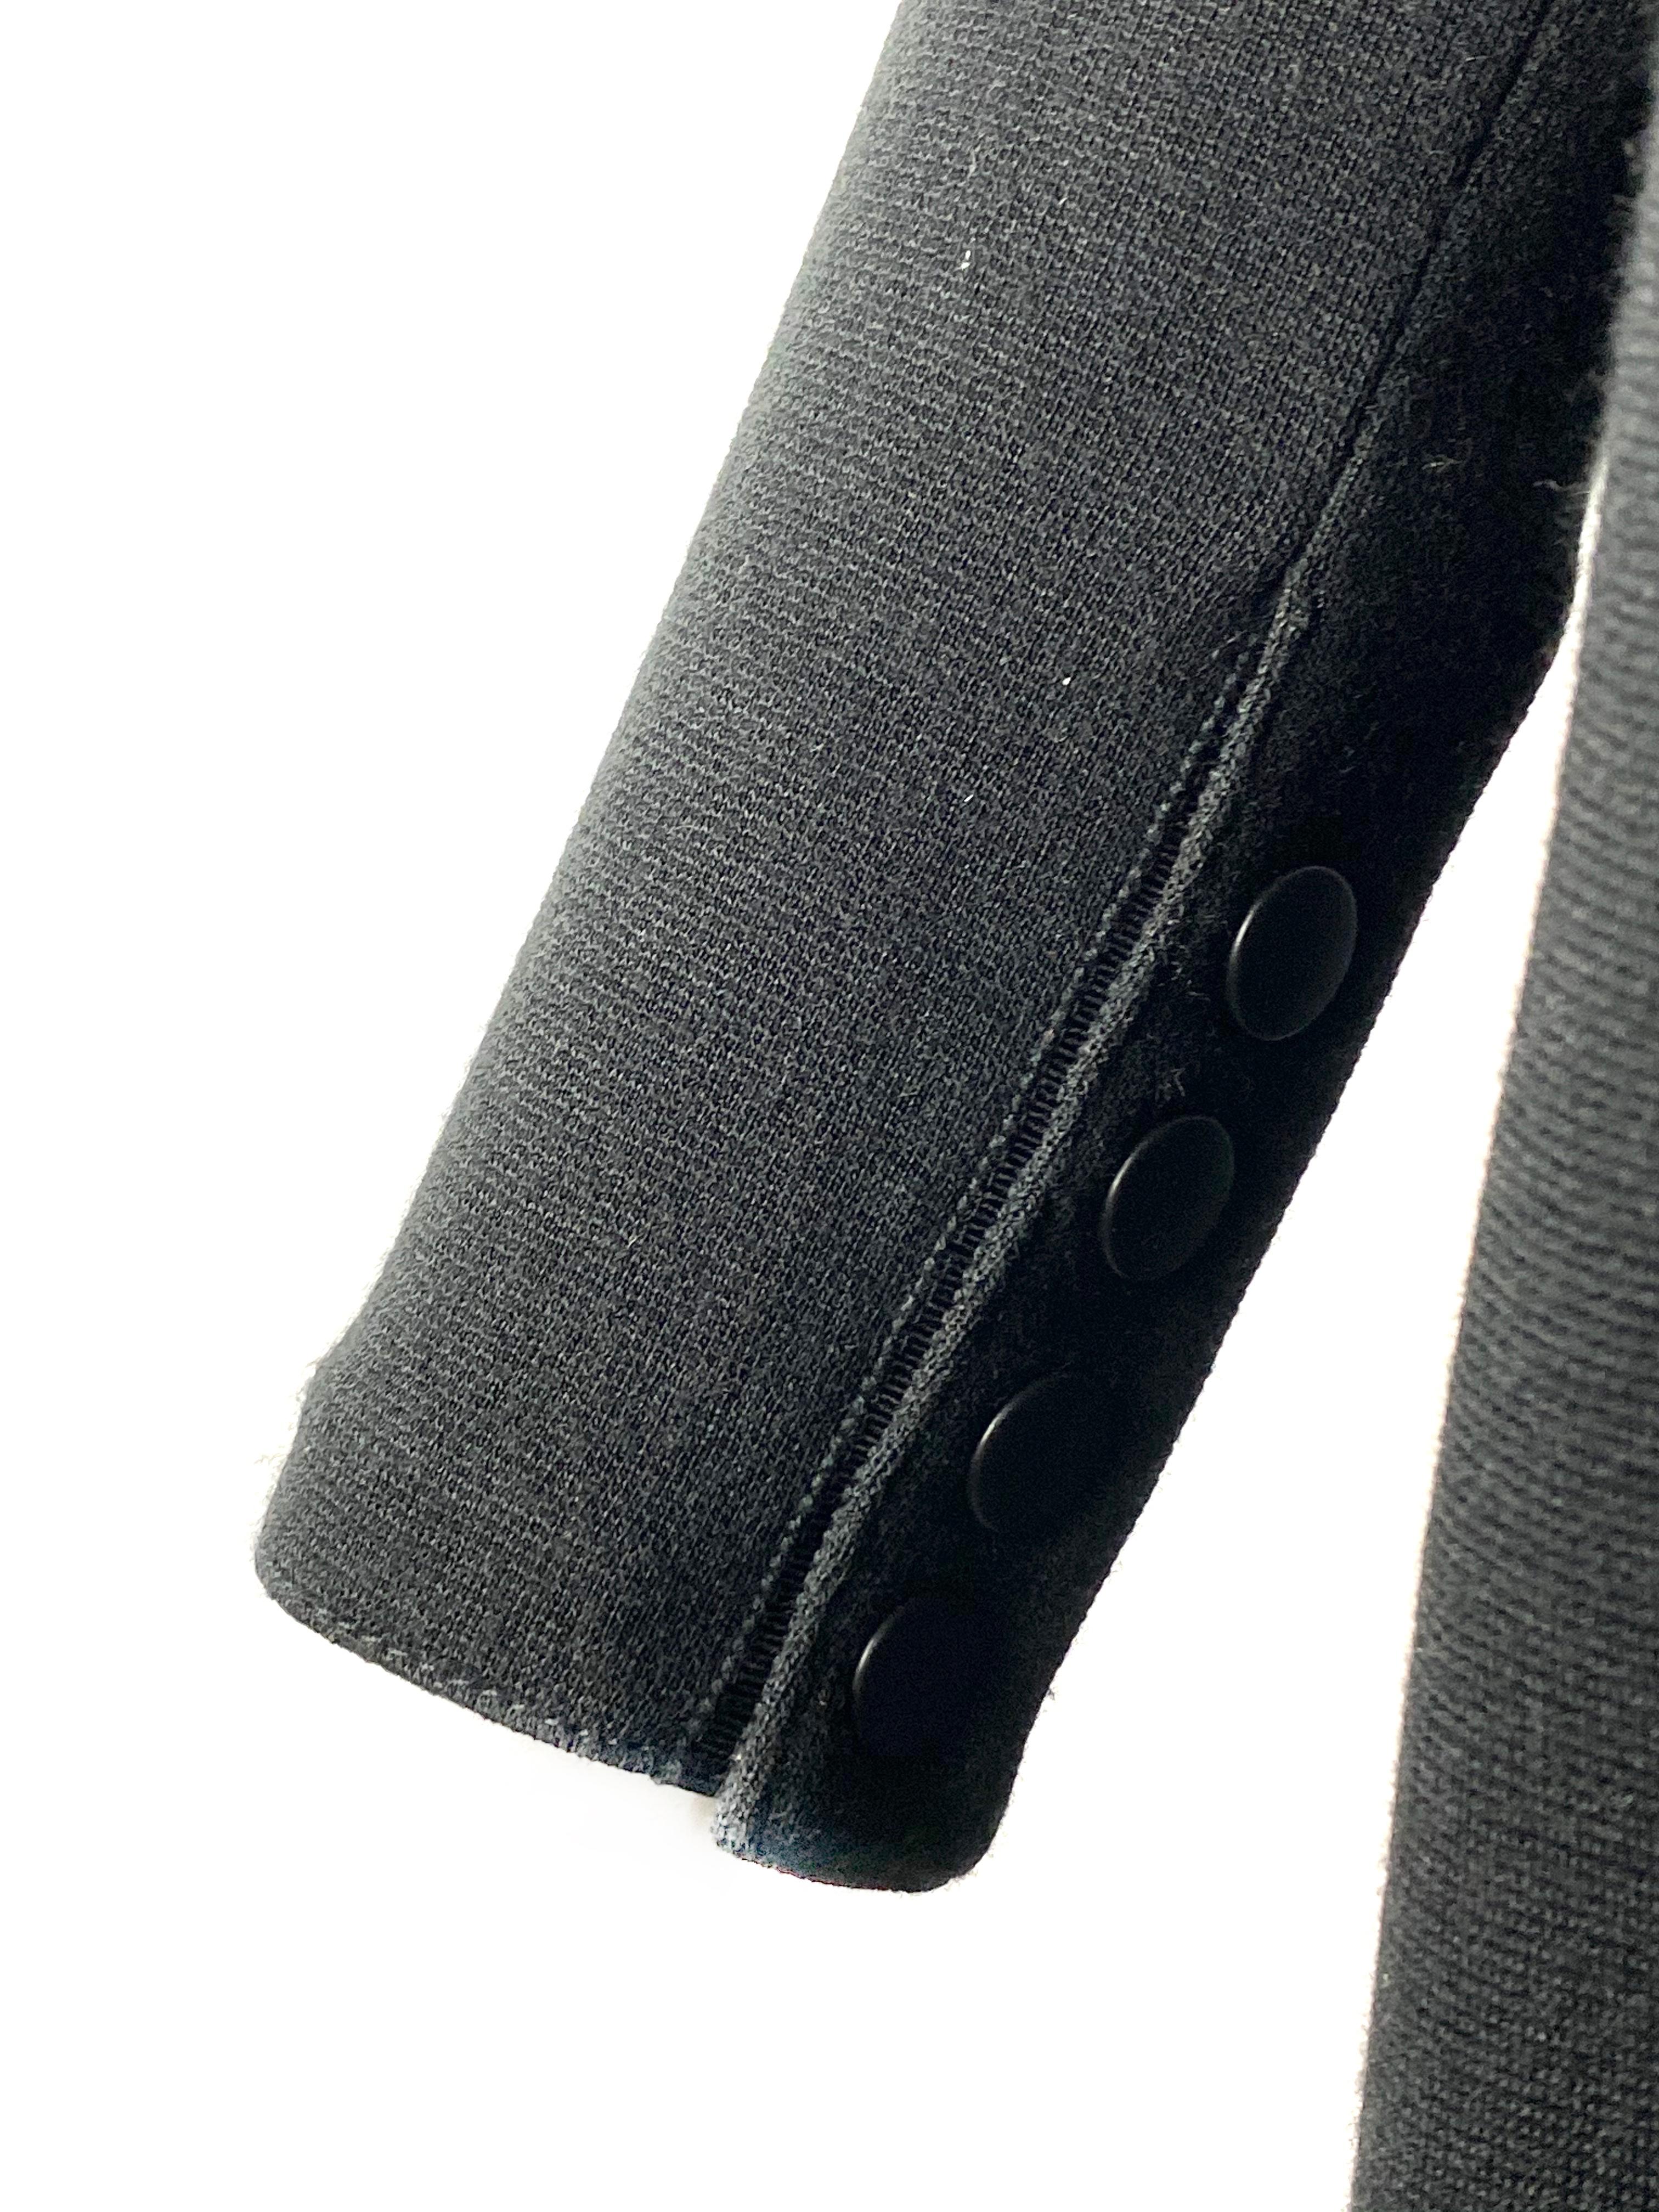 Proenza Schouler Black Wool Mini Coat Dress w/ Buttons Size 4 For Sale 2